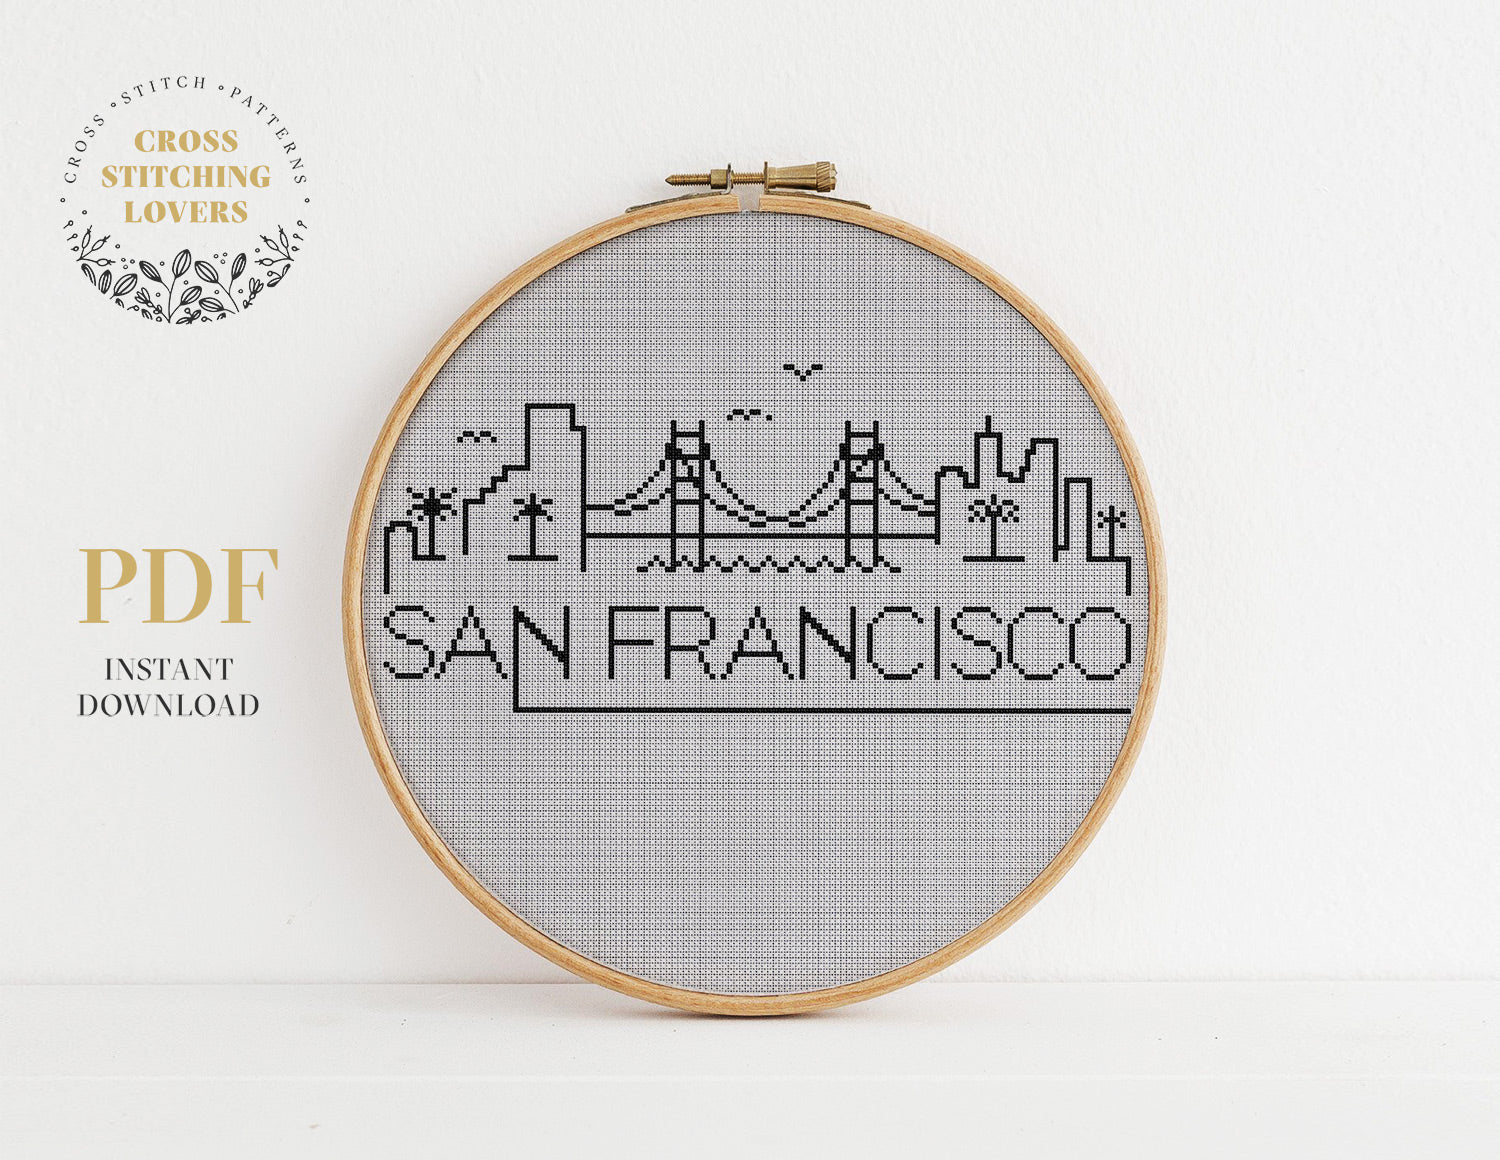 San Francisco - Cross stitch pattern